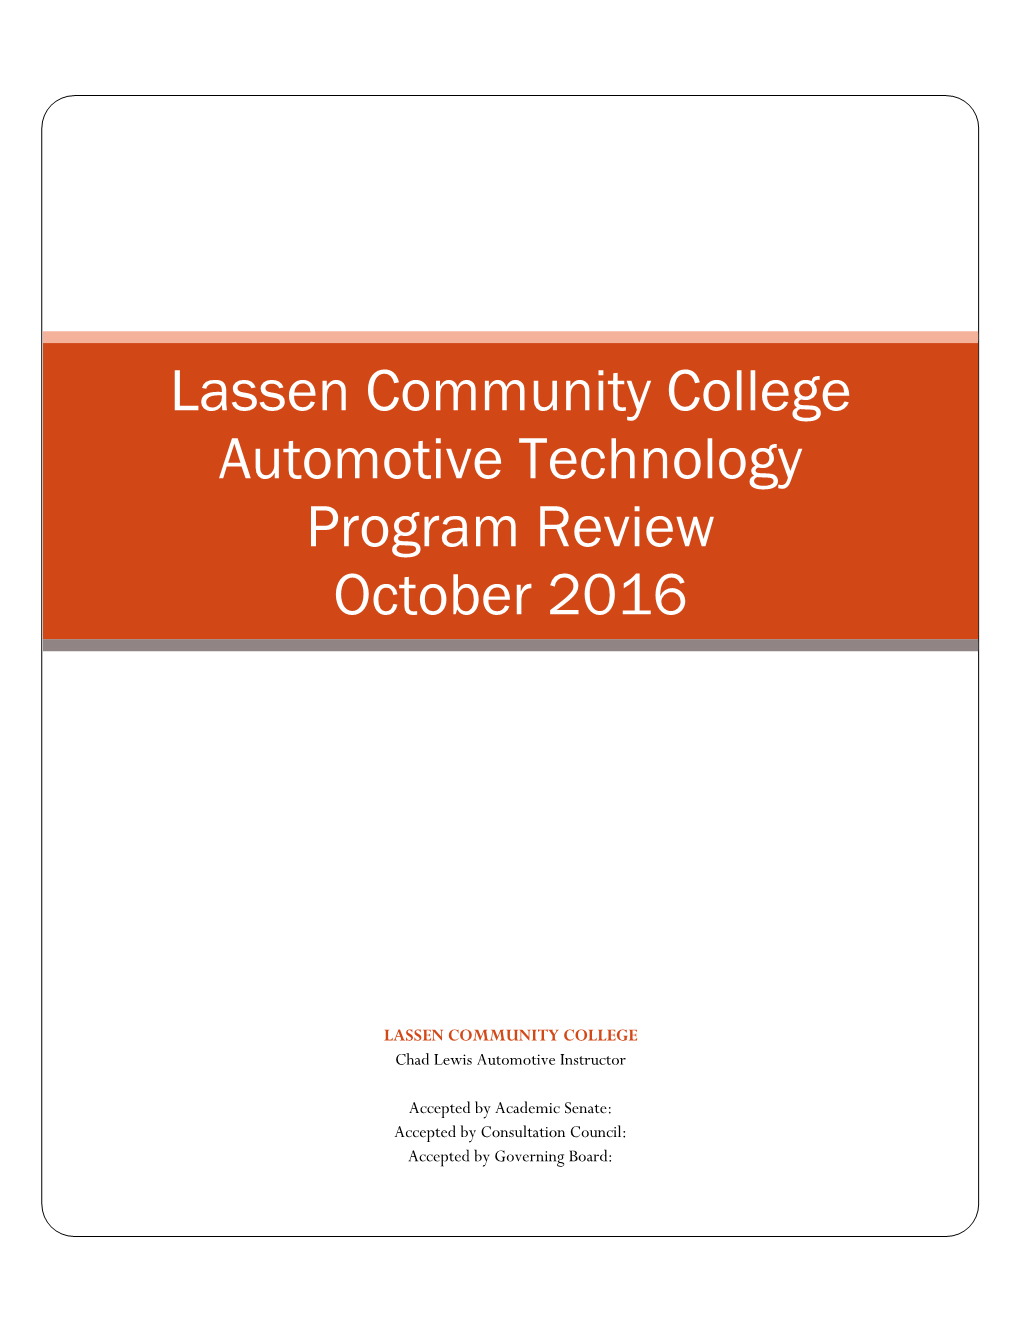 Lassen Community College Automotive Technology Program Review October 2016